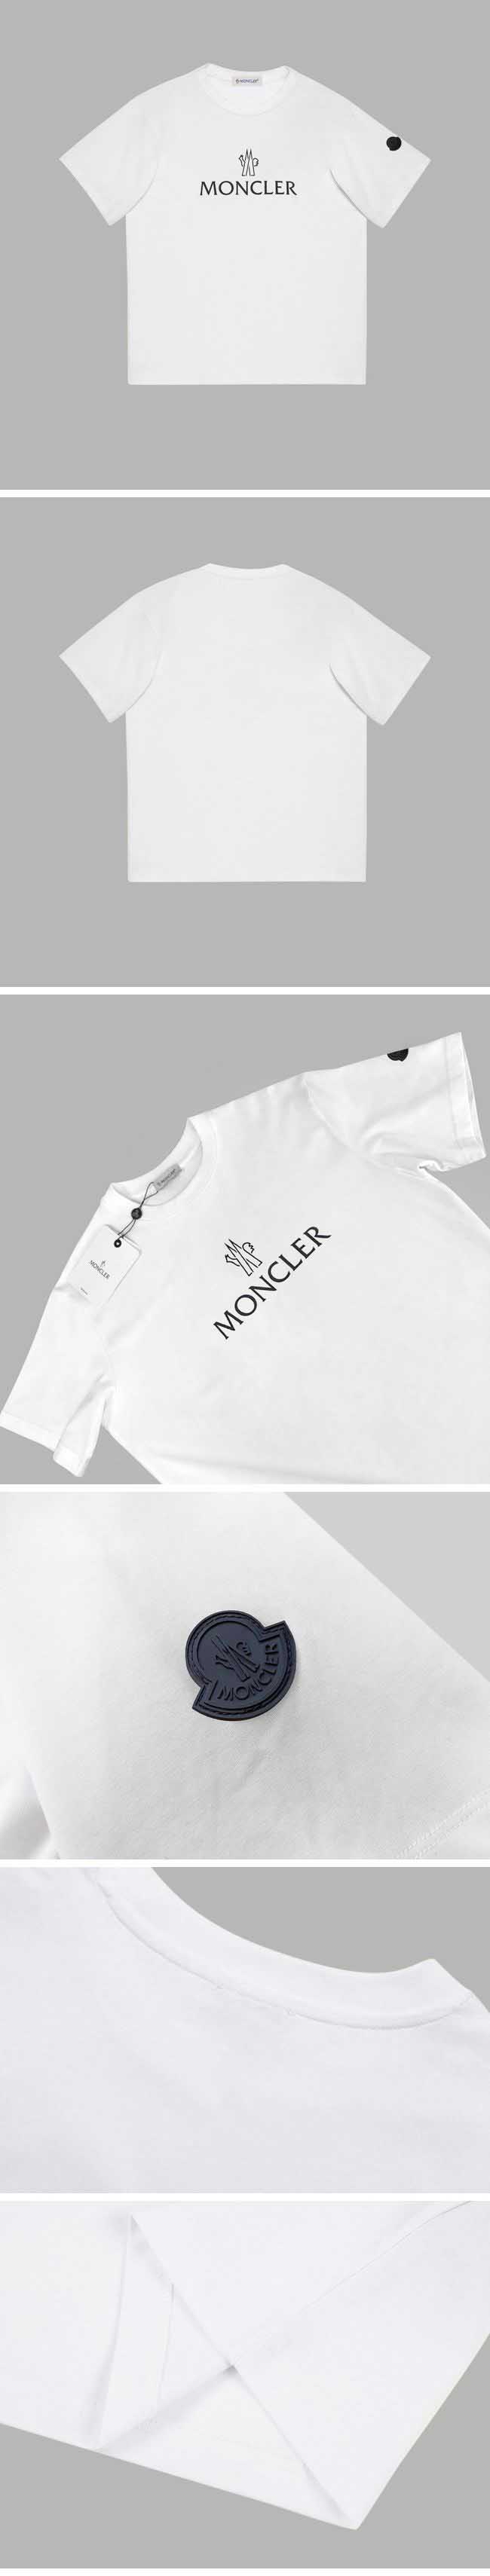 Moncler Shoulder Black logo Tee モンクレール ショルダー ブラック ロゴ Tシャツ